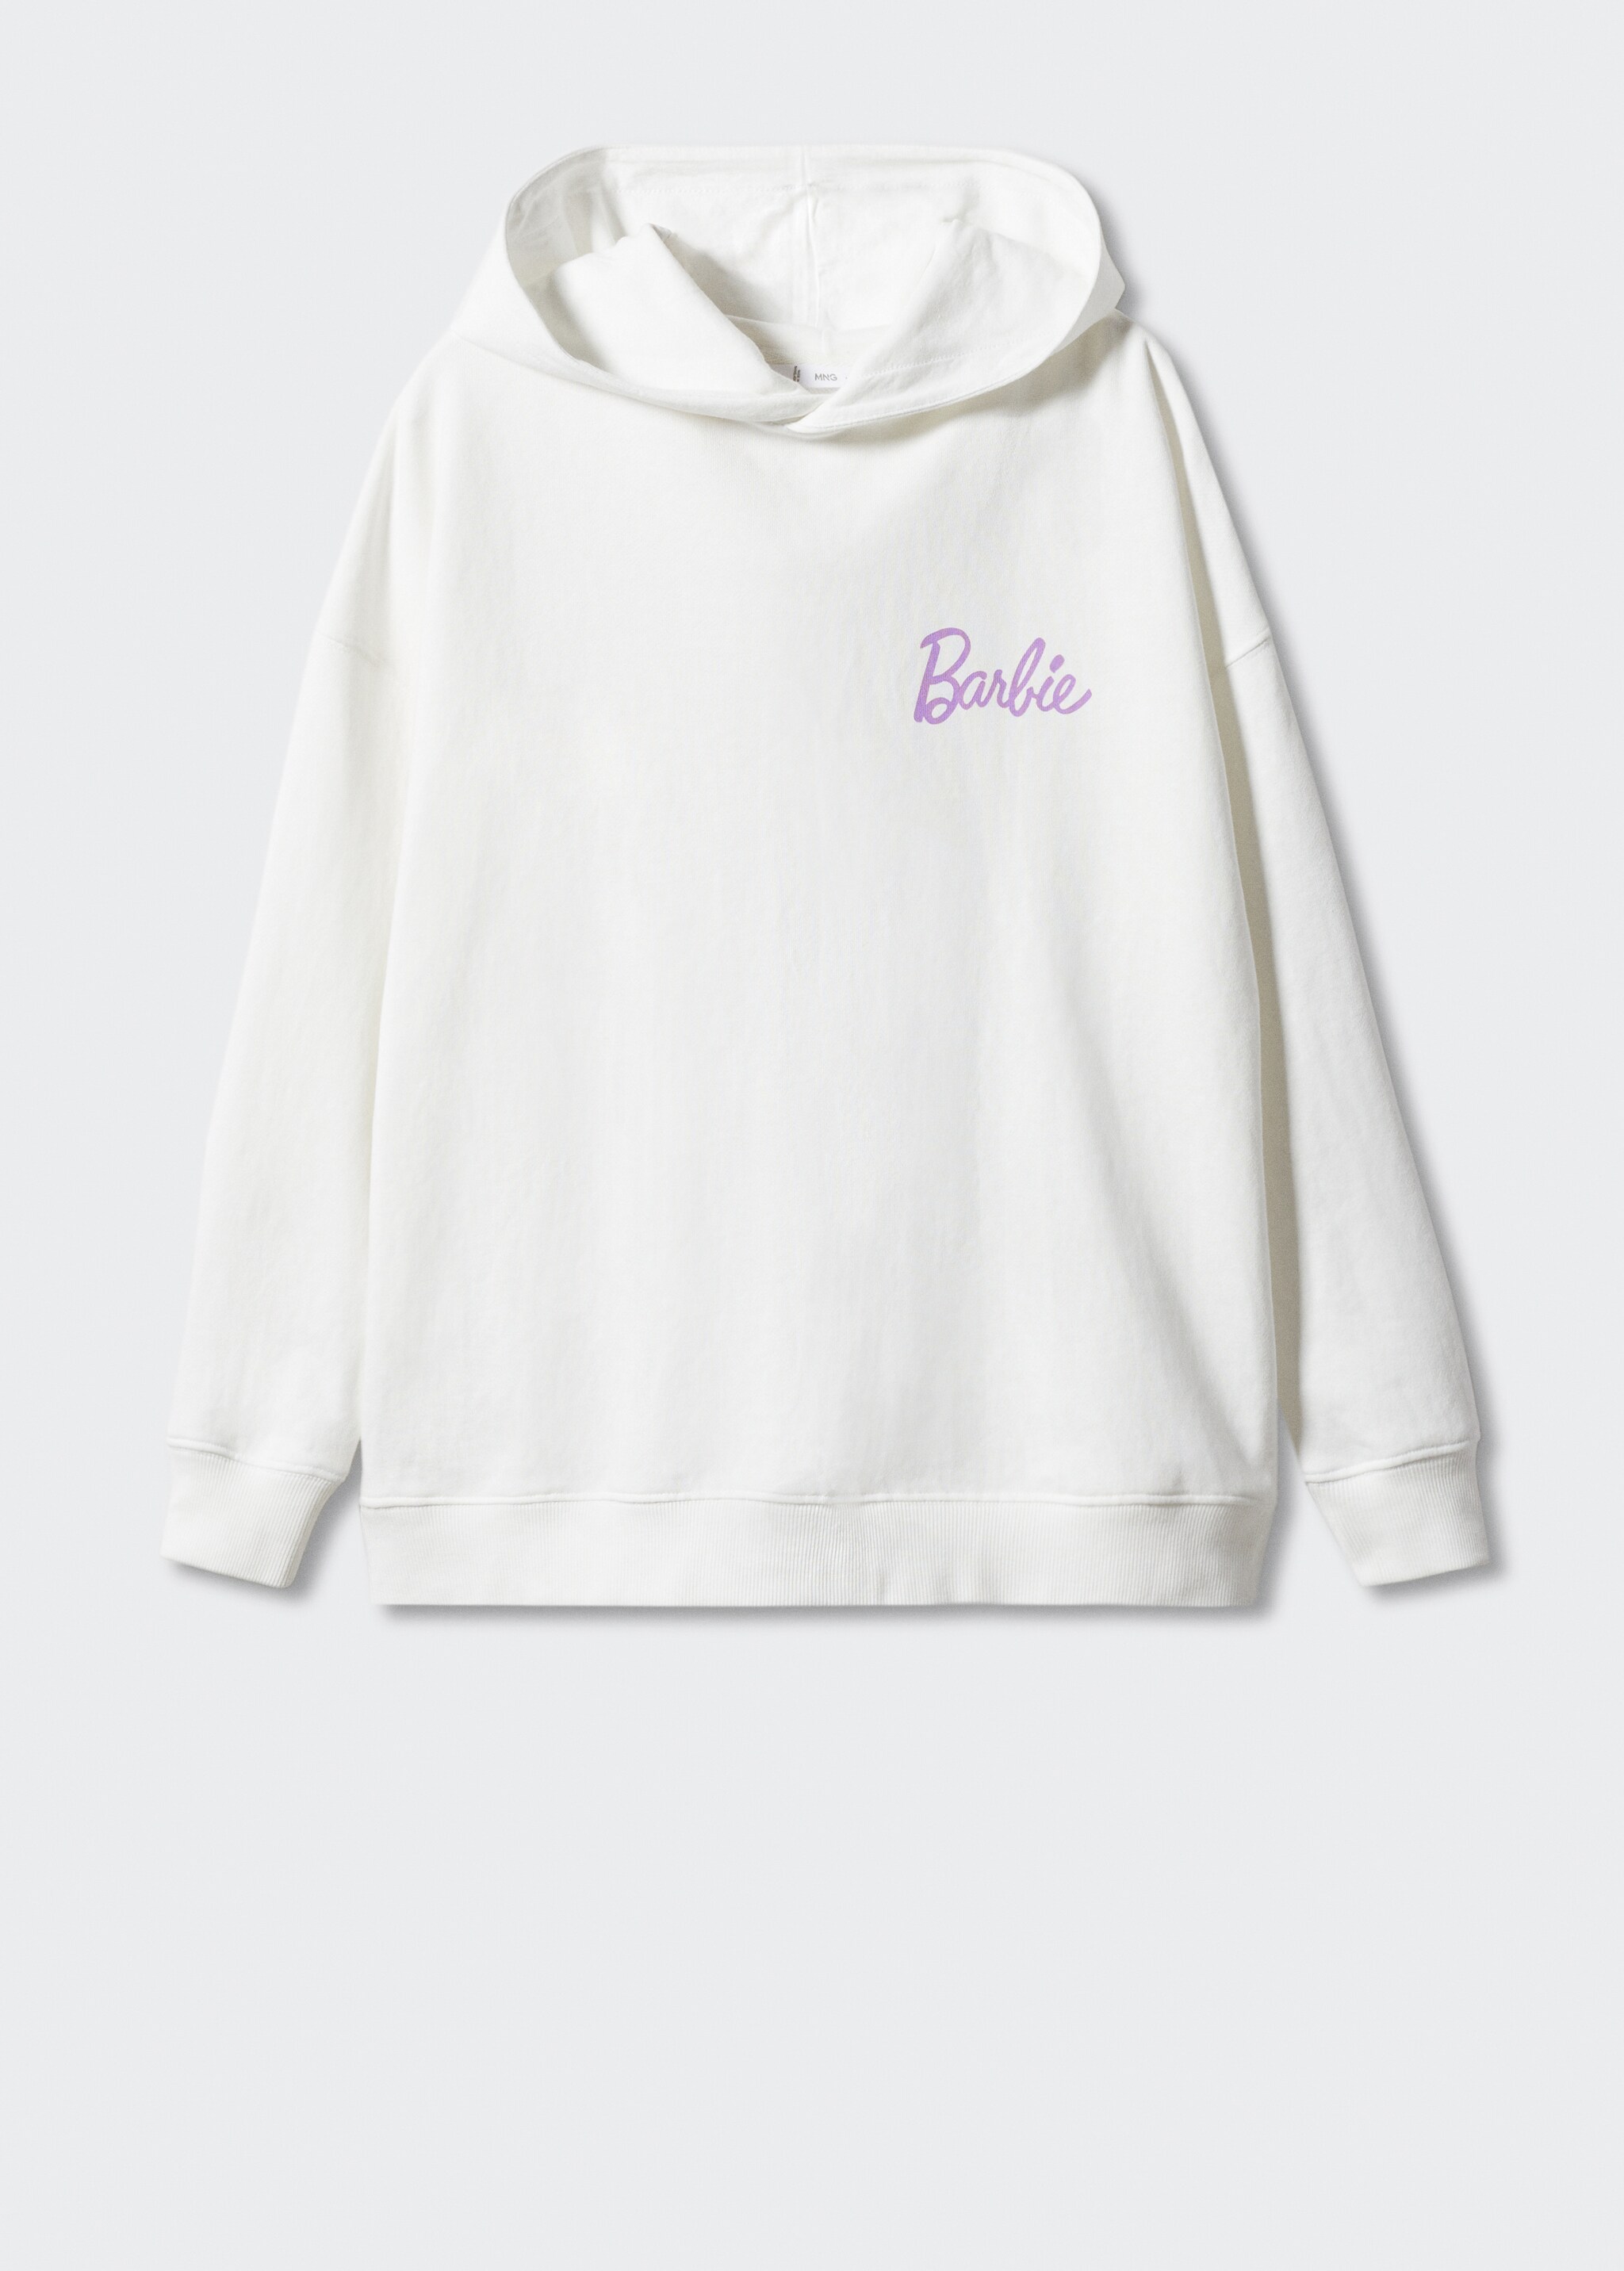 Barbie cotton sweatshirt - Article without model